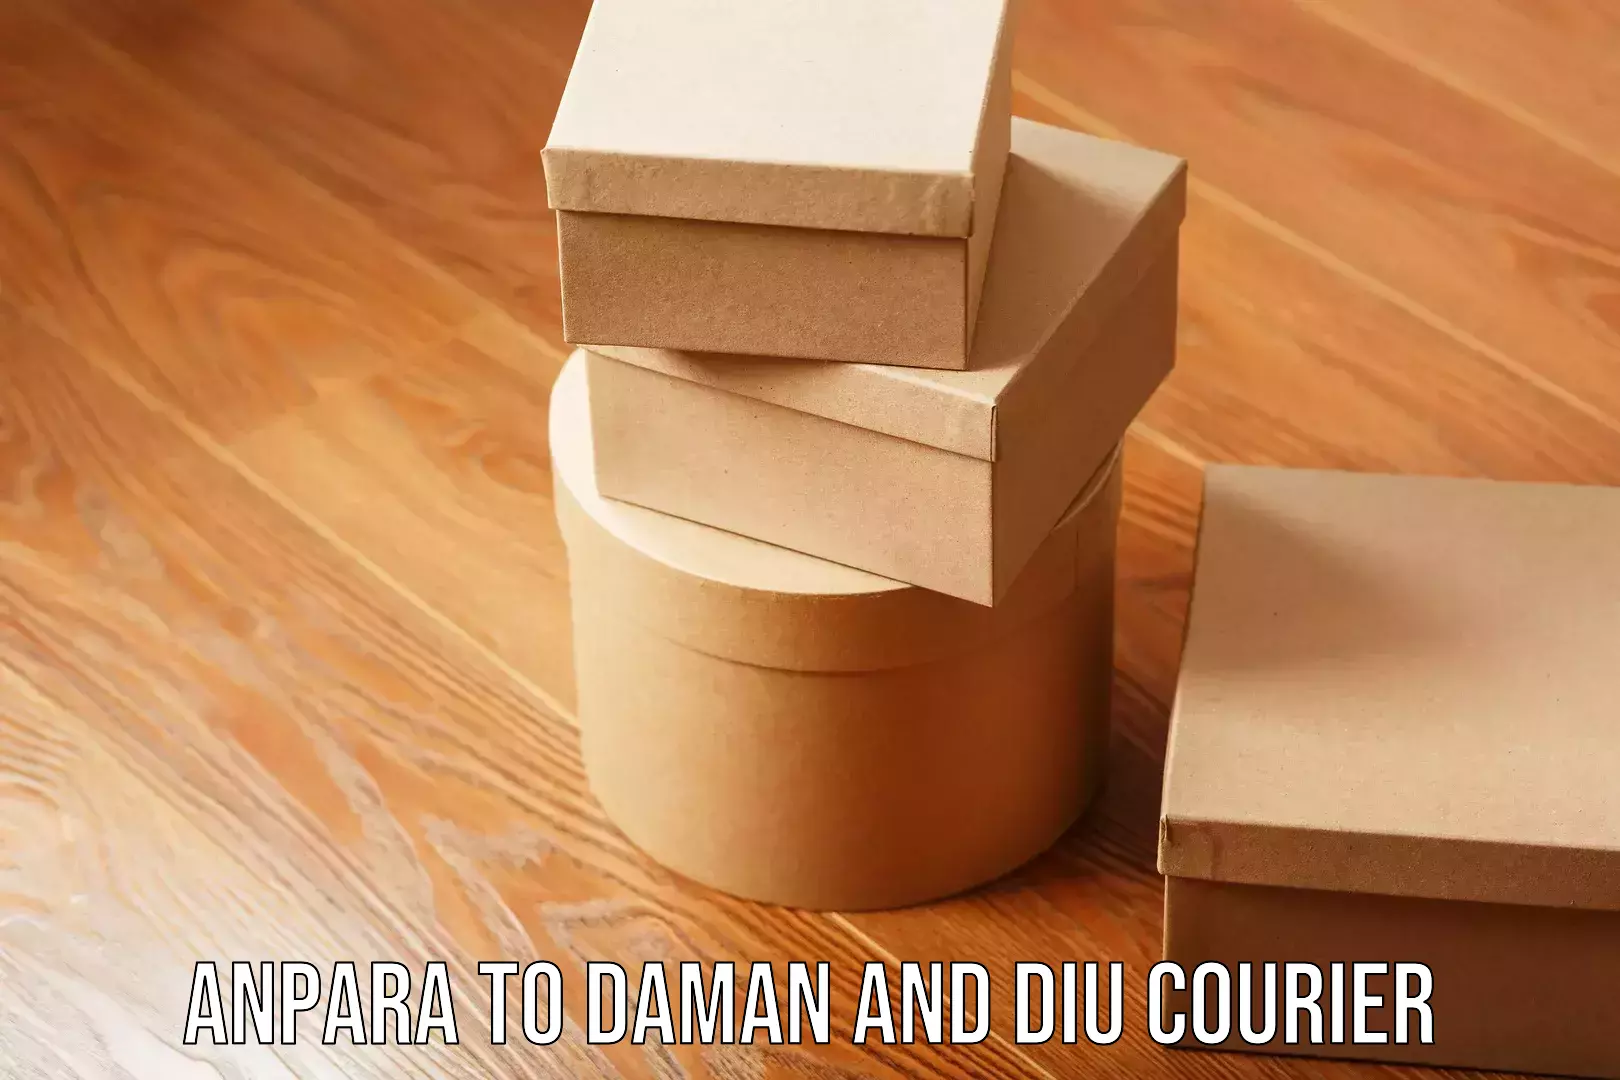 Digital courier platforms Anpara to Daman and Diu